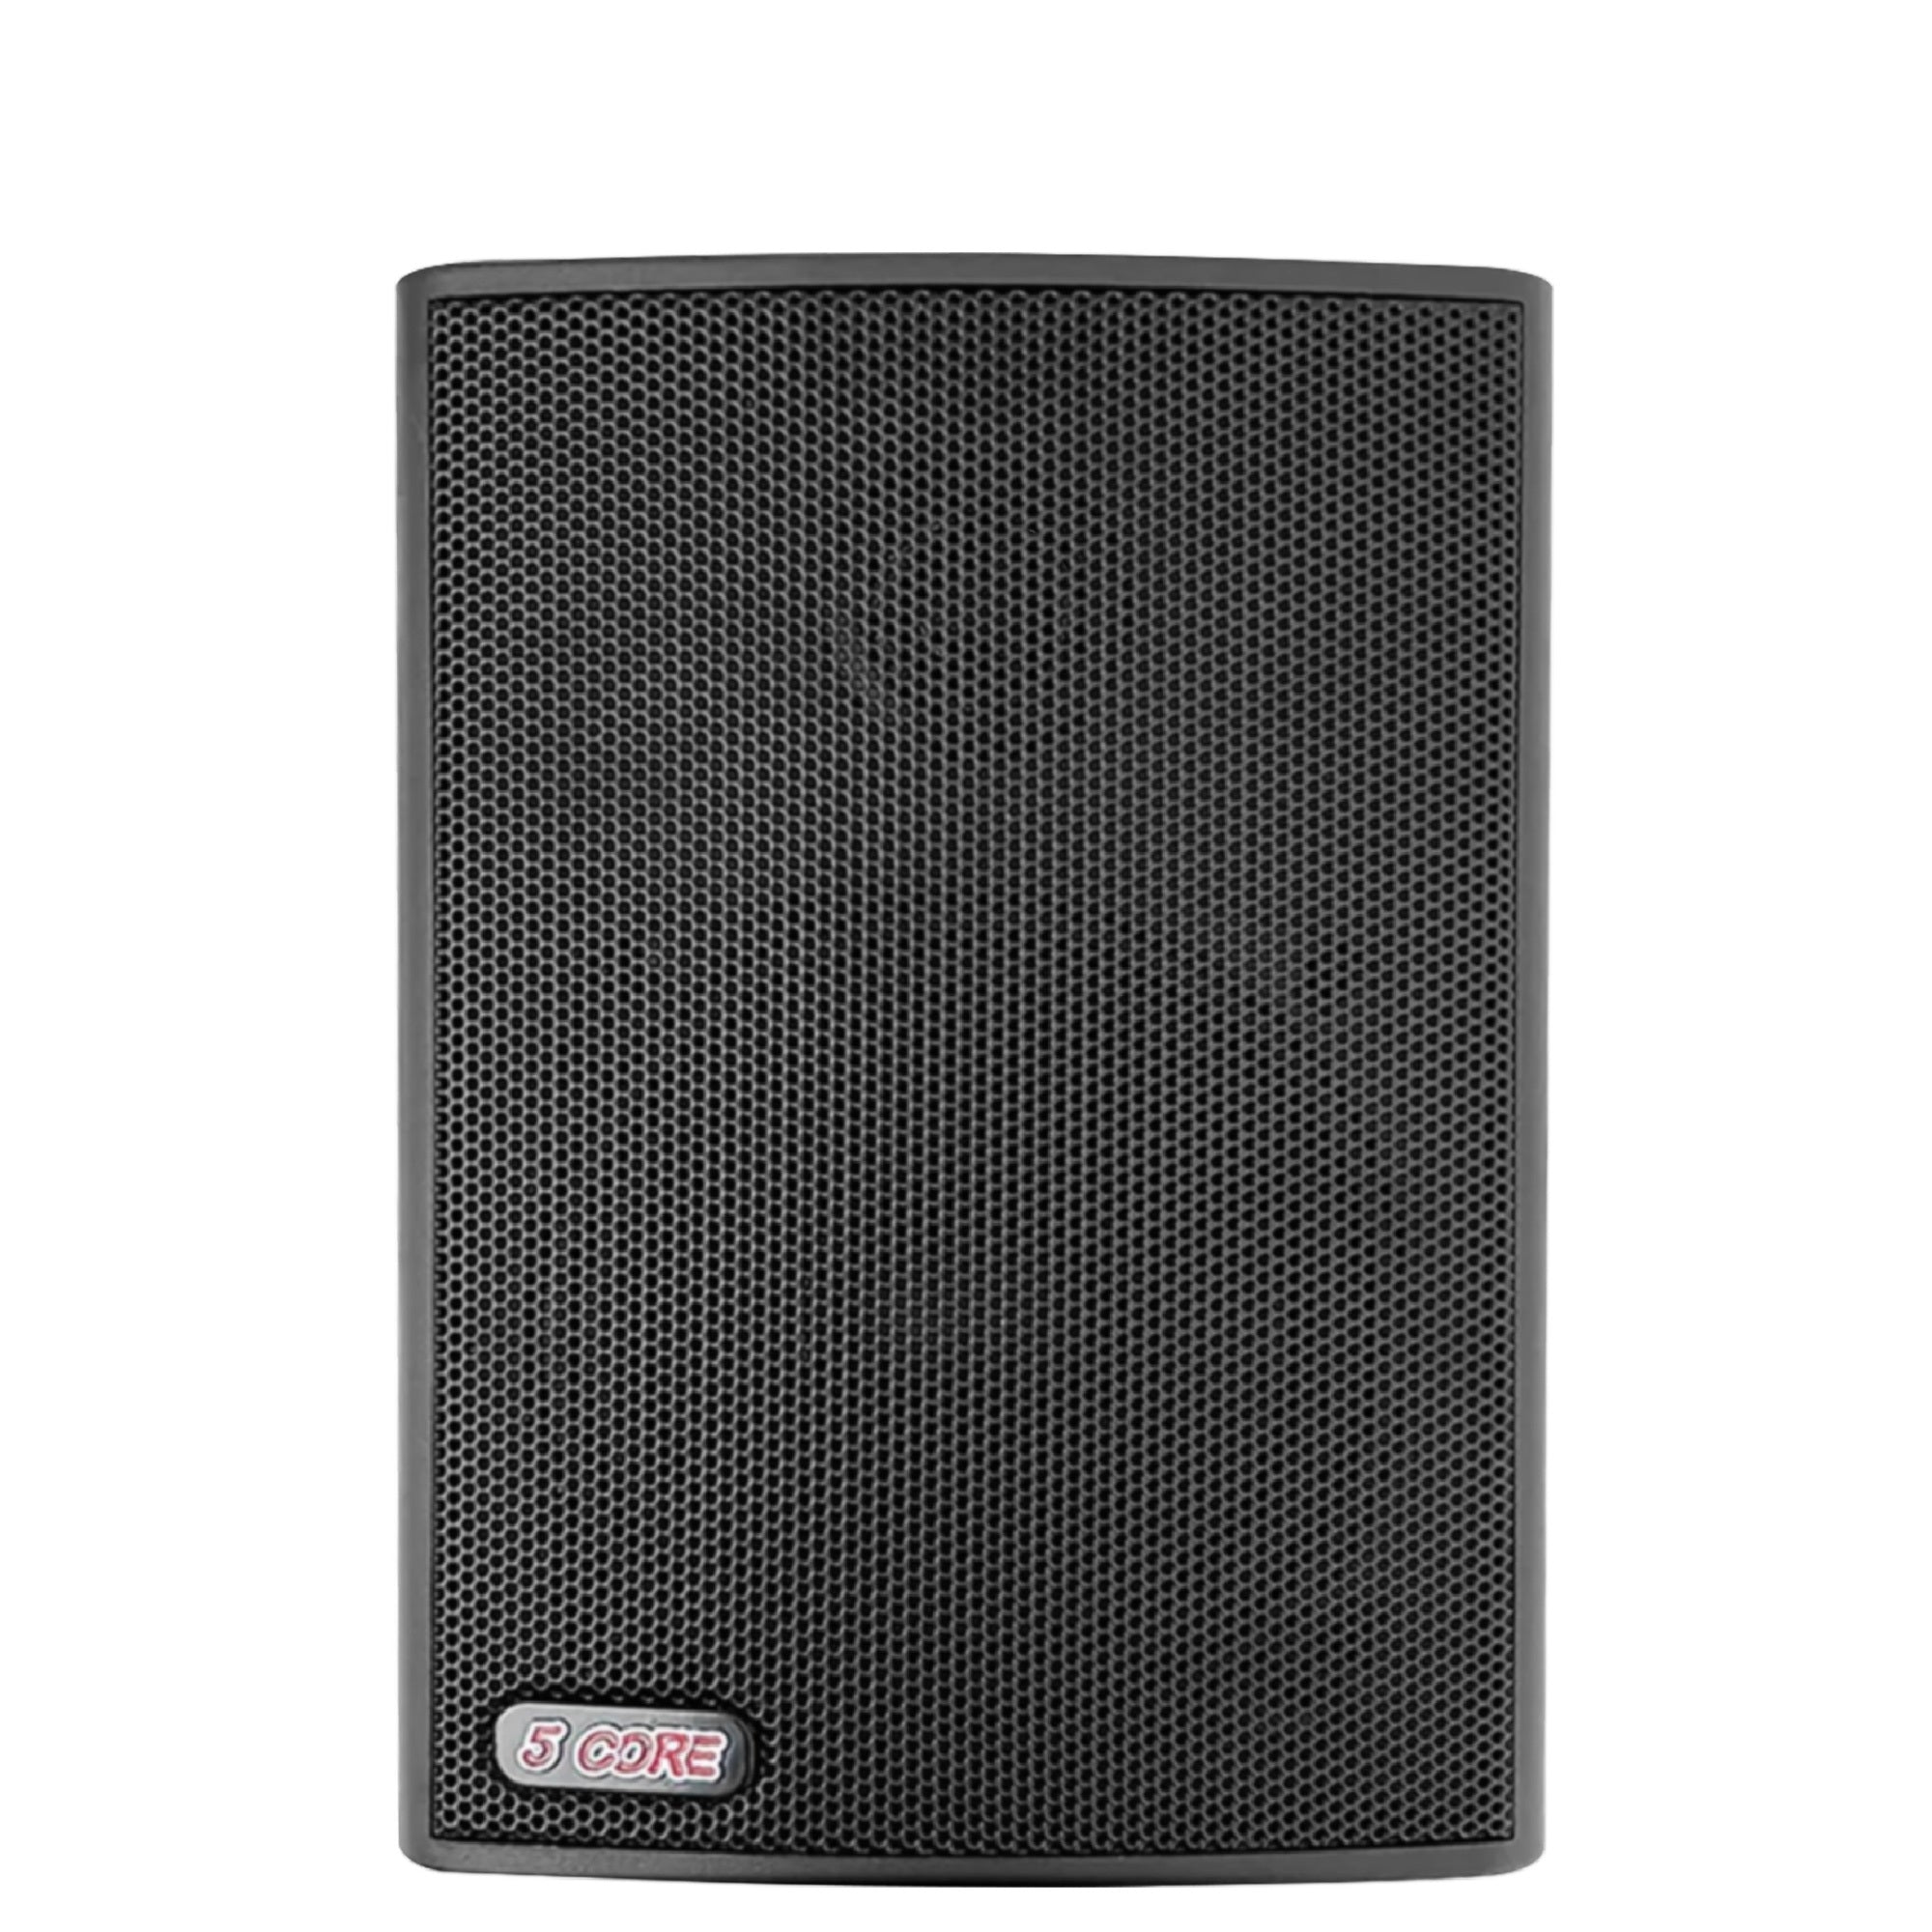 5Core Outdoor Wall Speakers 2Way 20W Ceiling Mount Speaker Heavy Duty ABS Enclosure Black